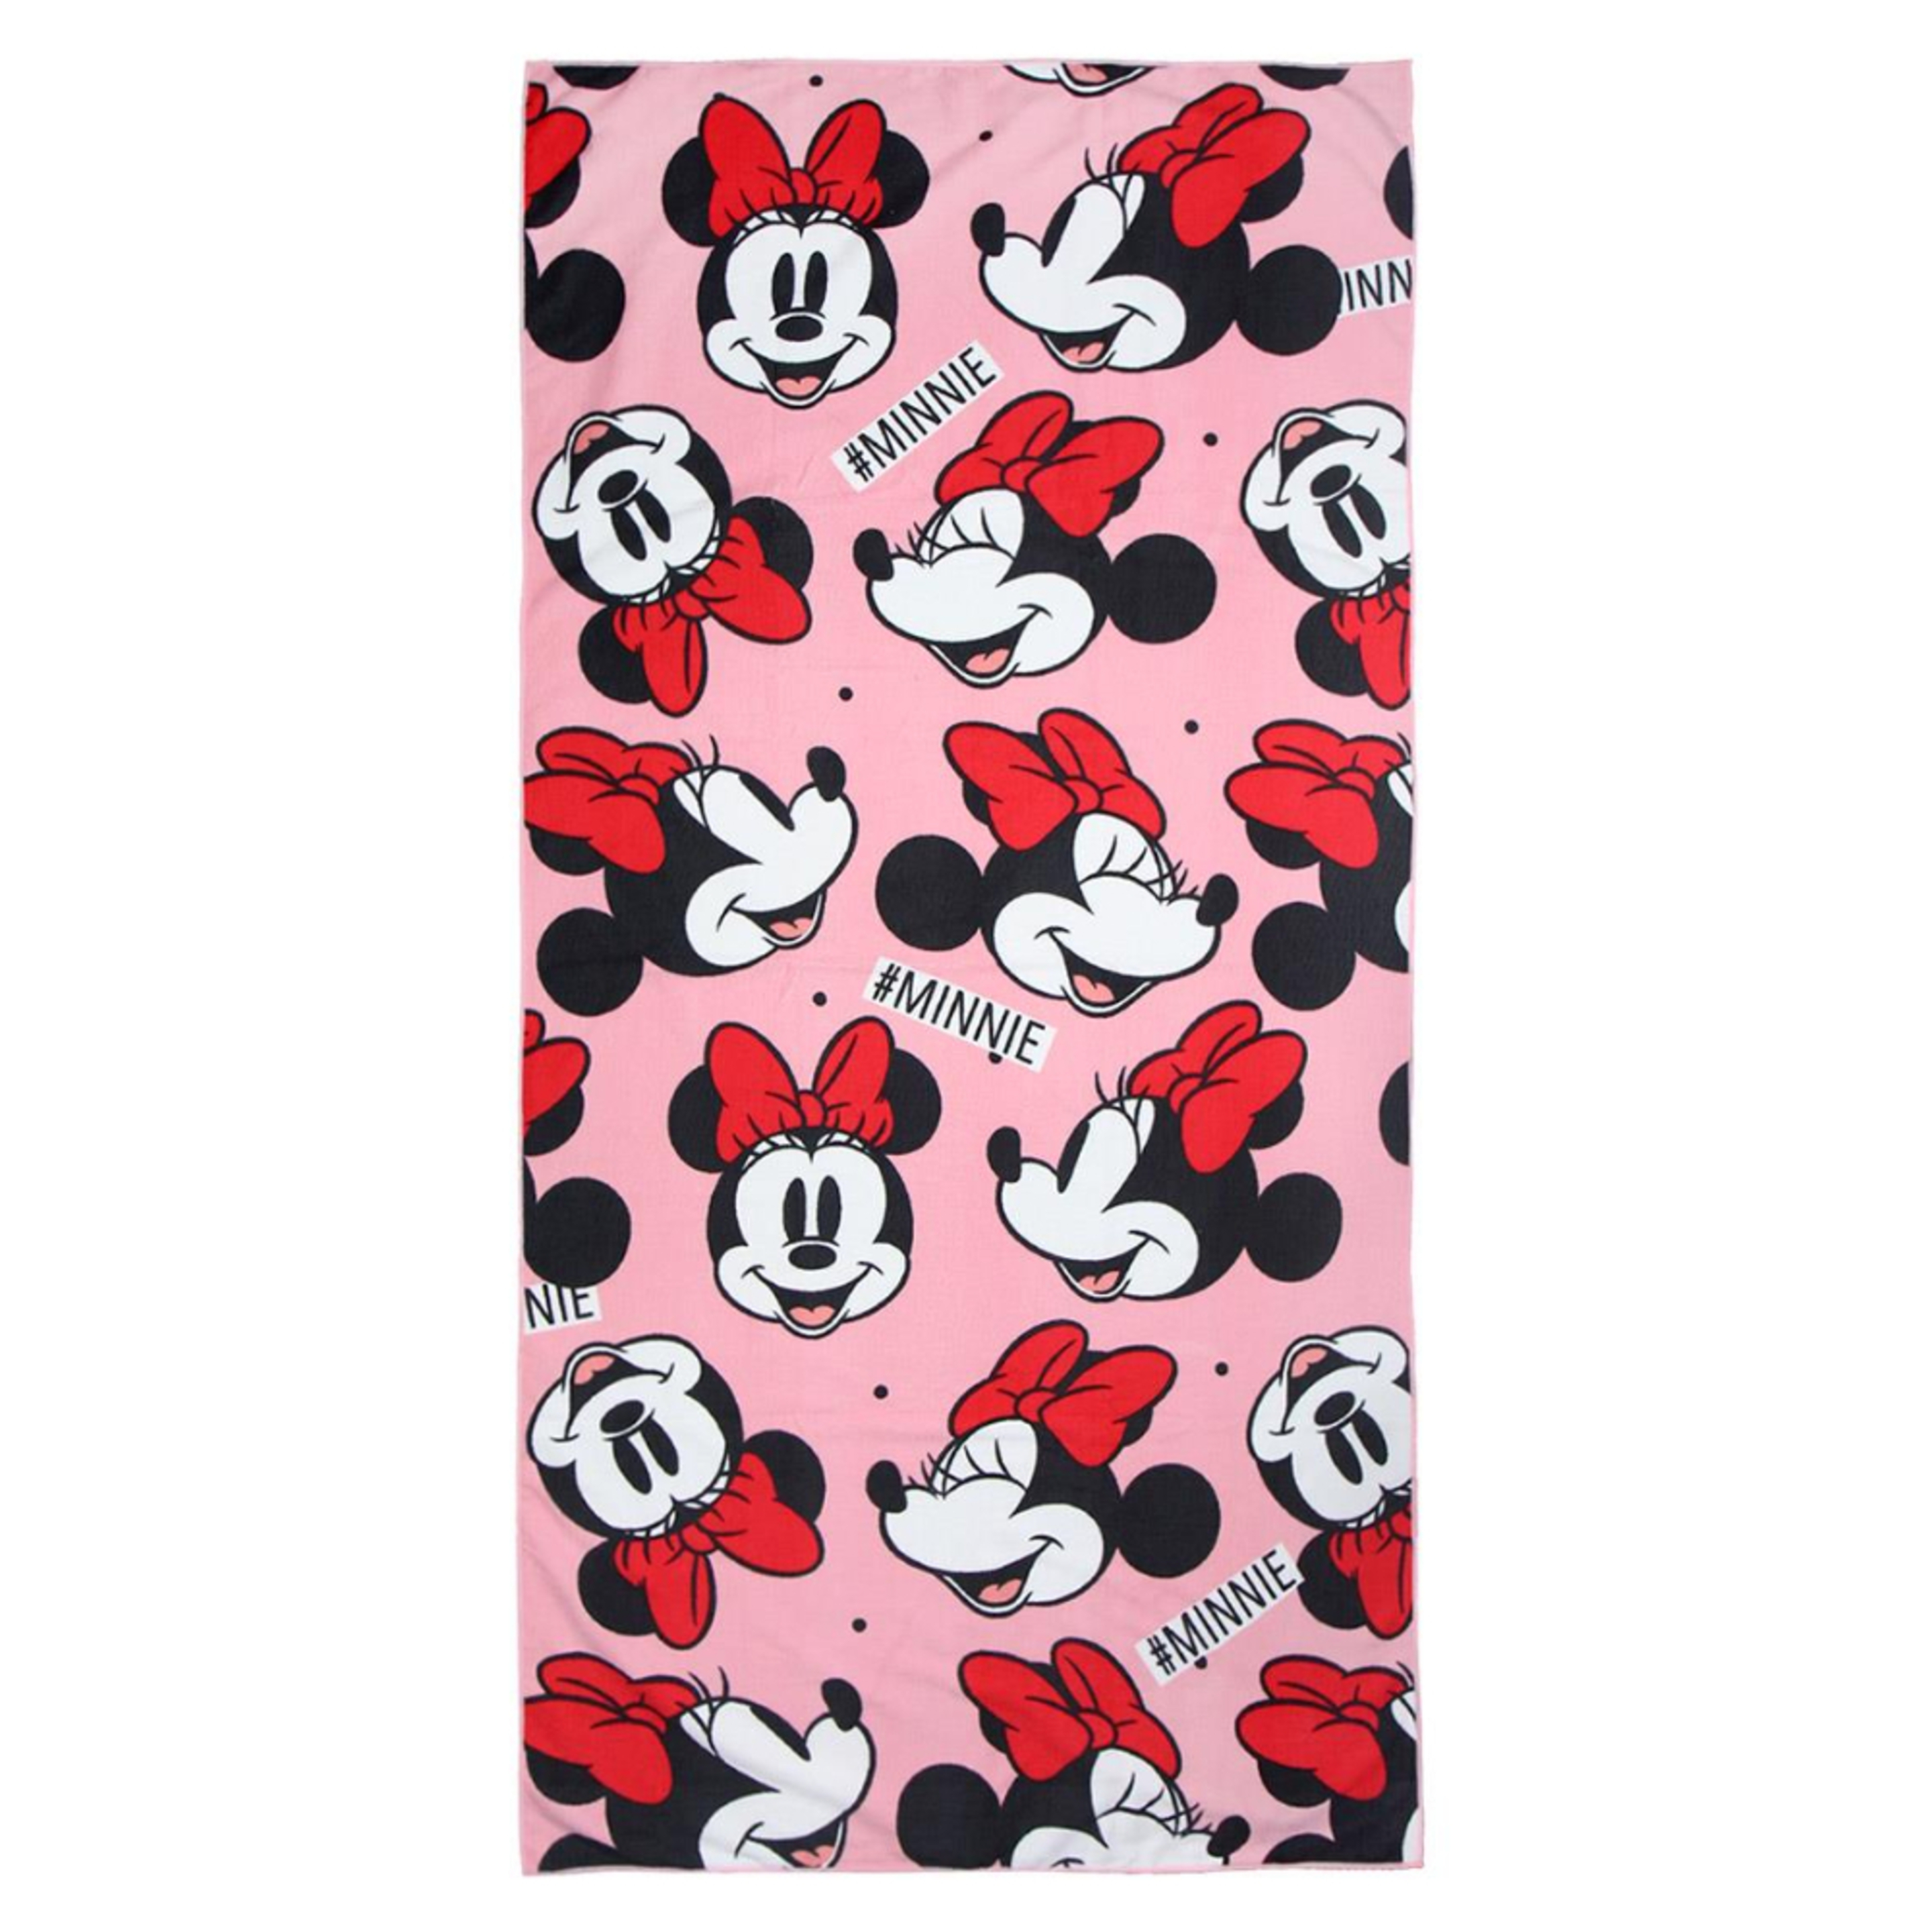 Toalha Minnie Mouse 64318 Disney - rosa - 